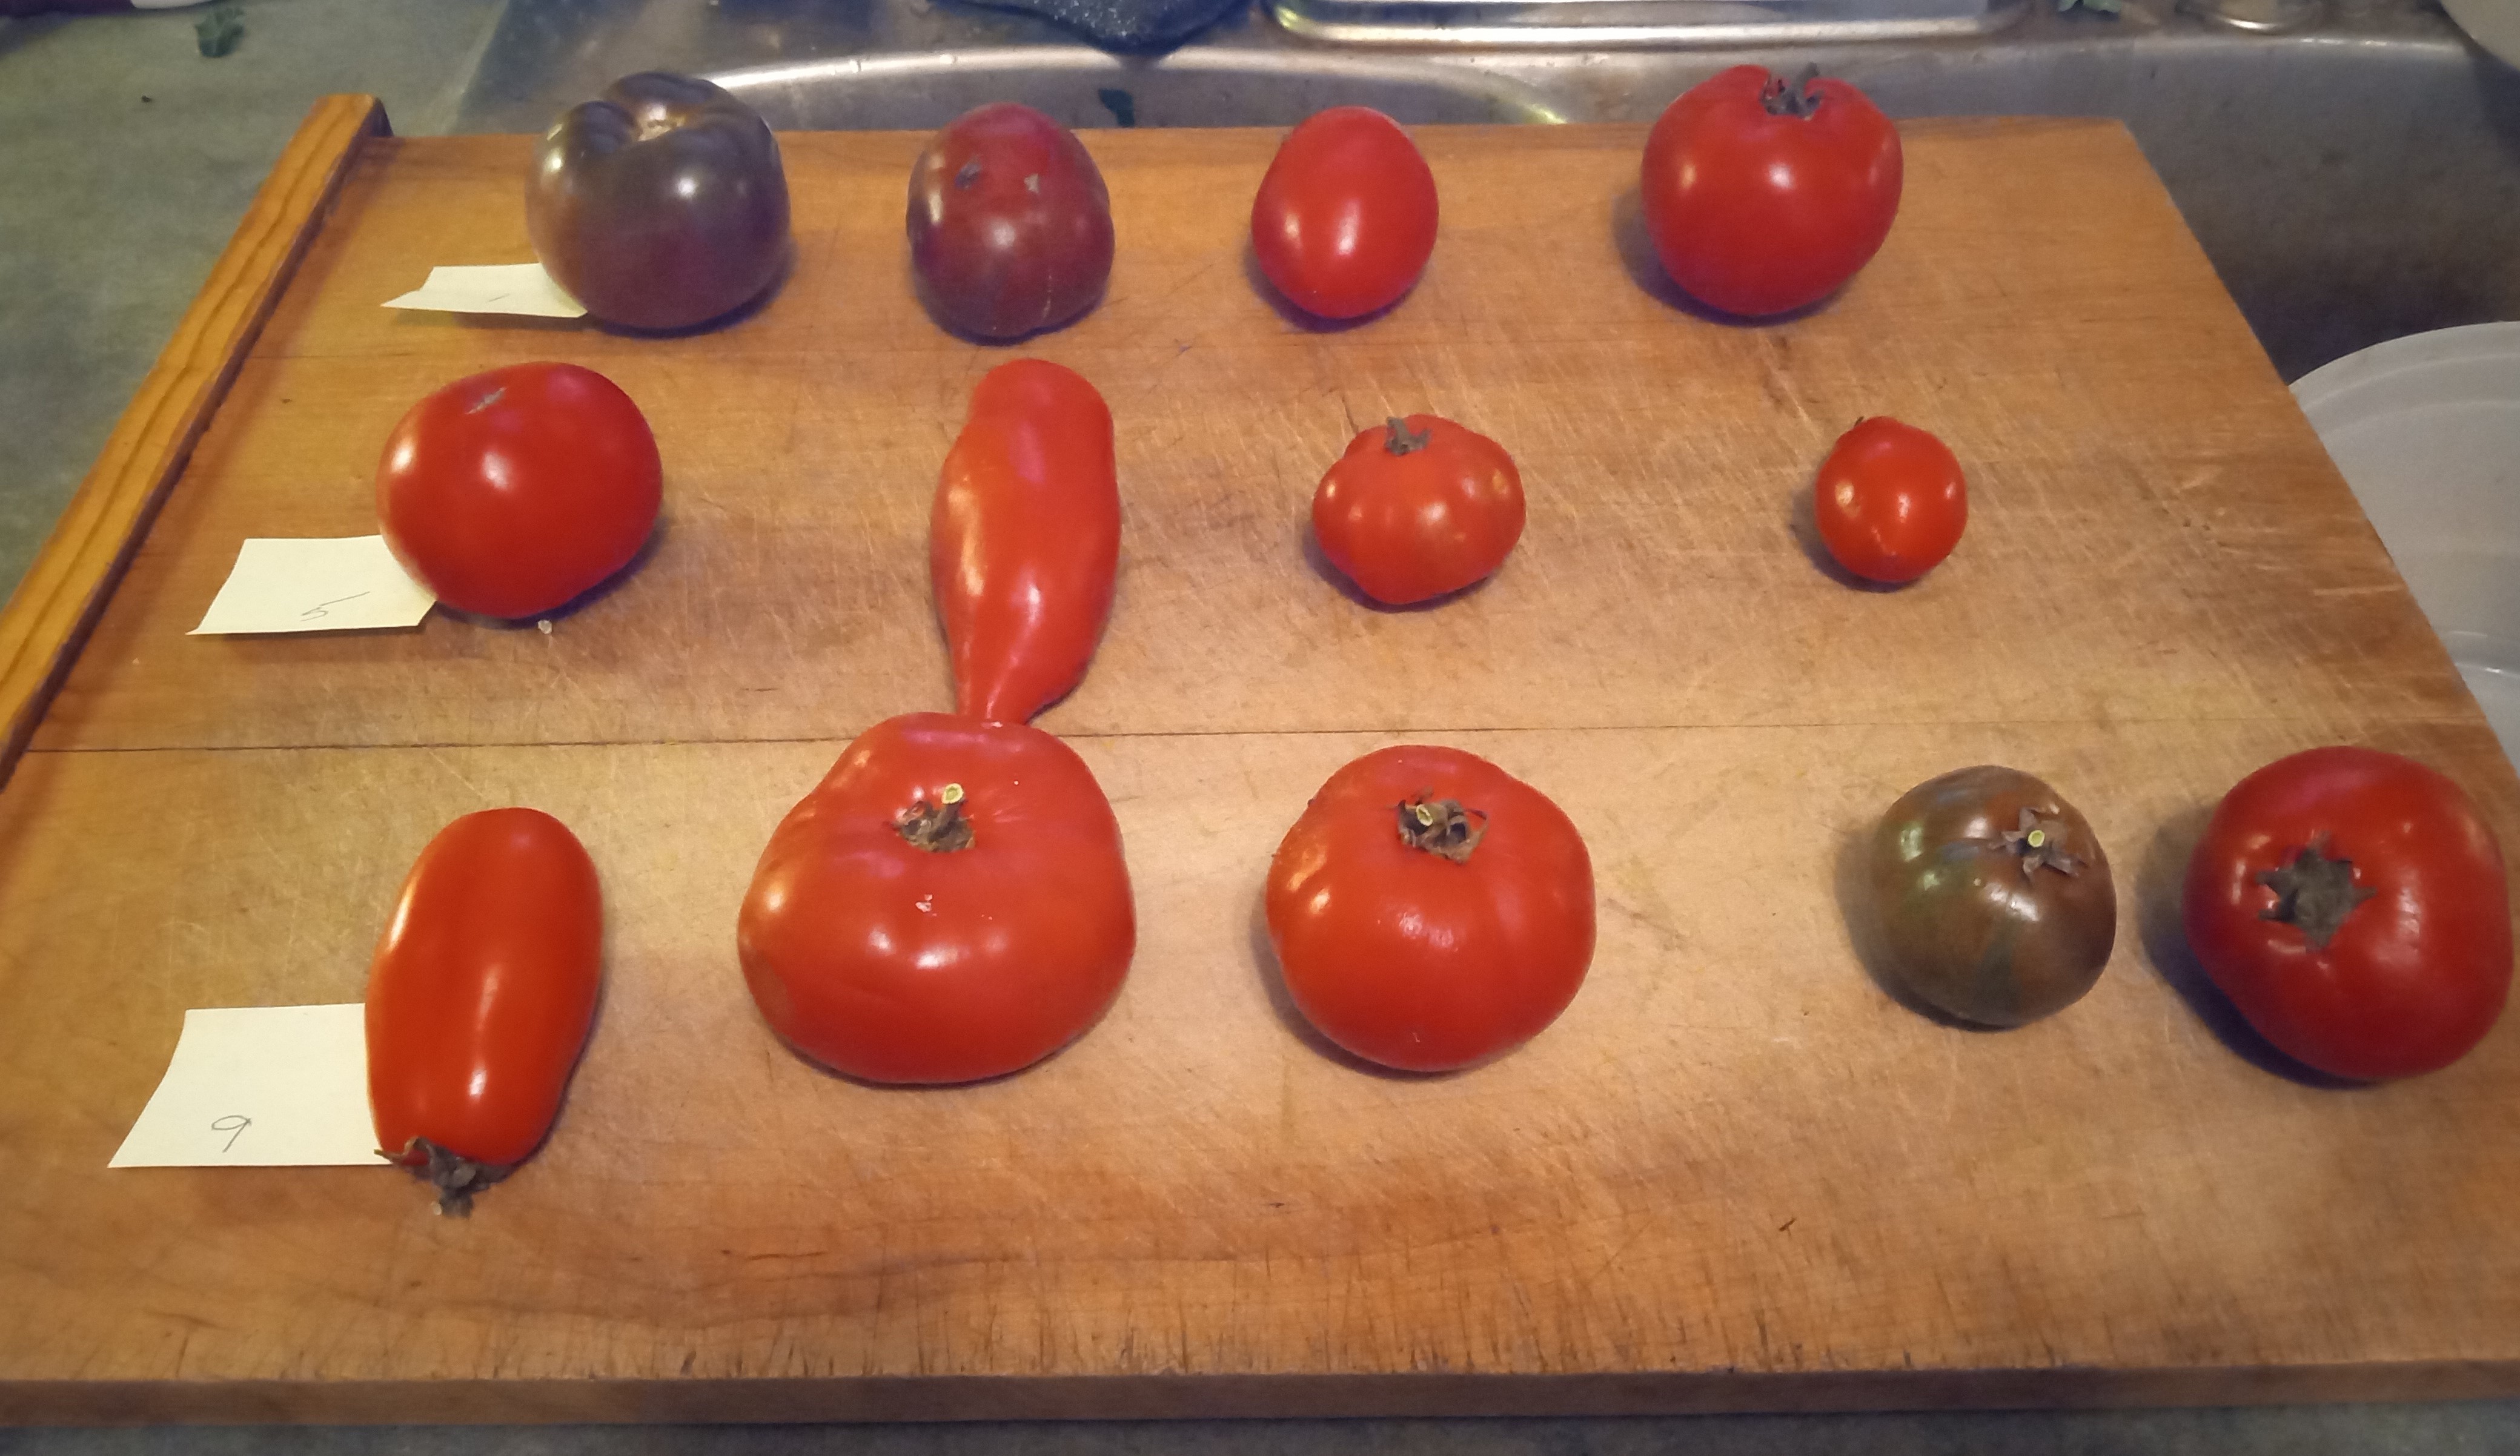 Tomato varieties sampled for pH